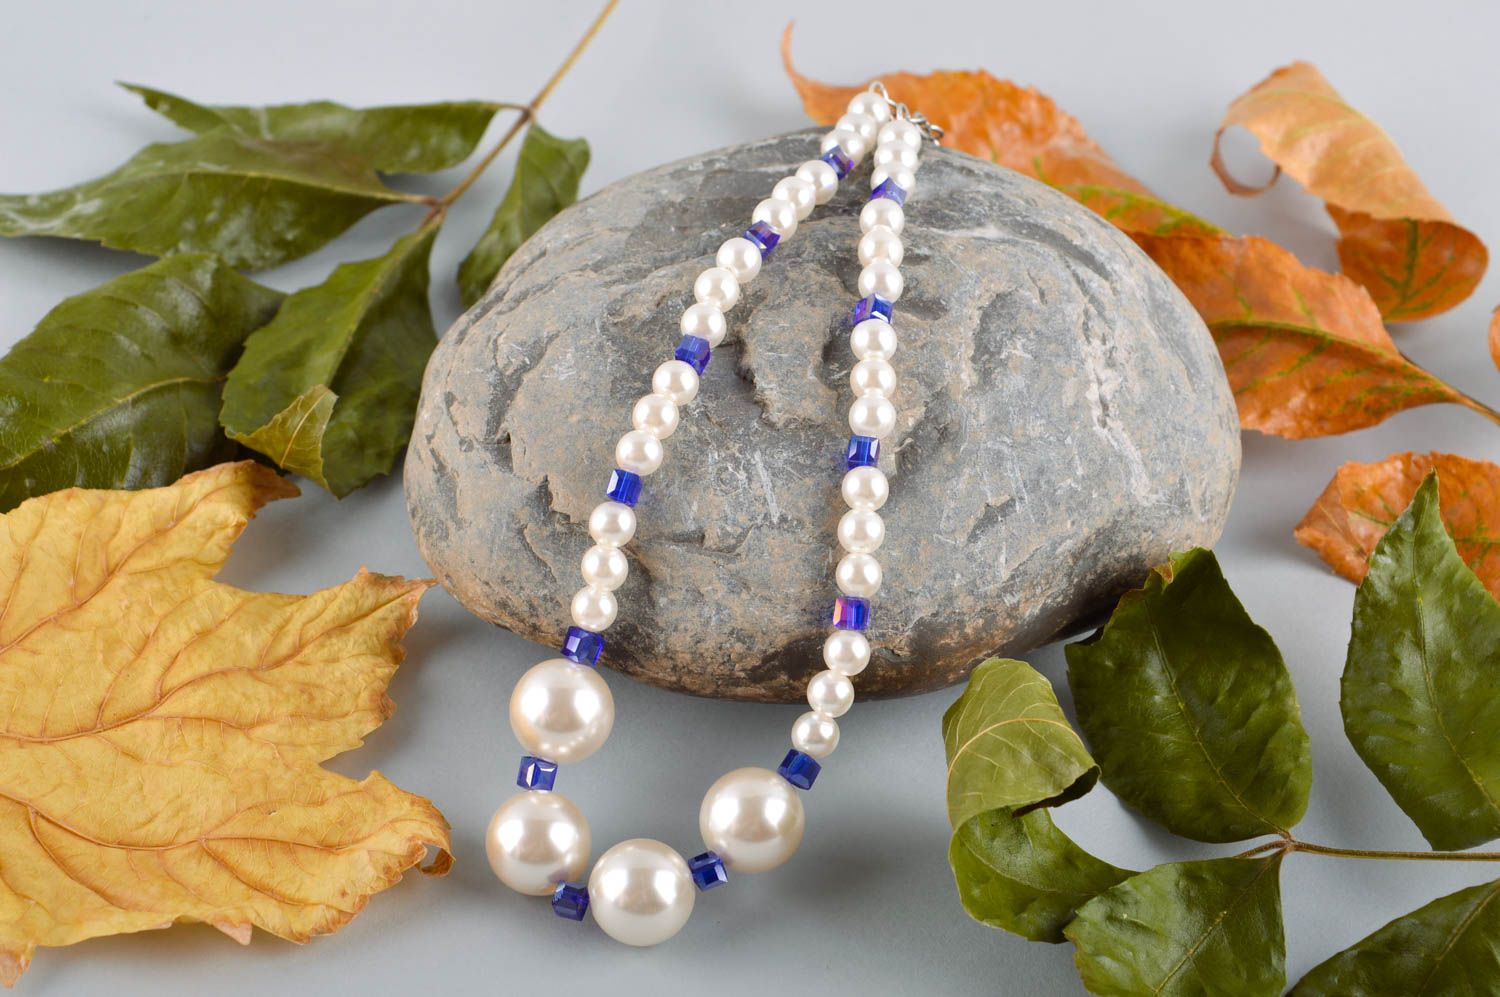 Stylish handmade beaded necklace artisan jewelry designs fashion accessories photo 1